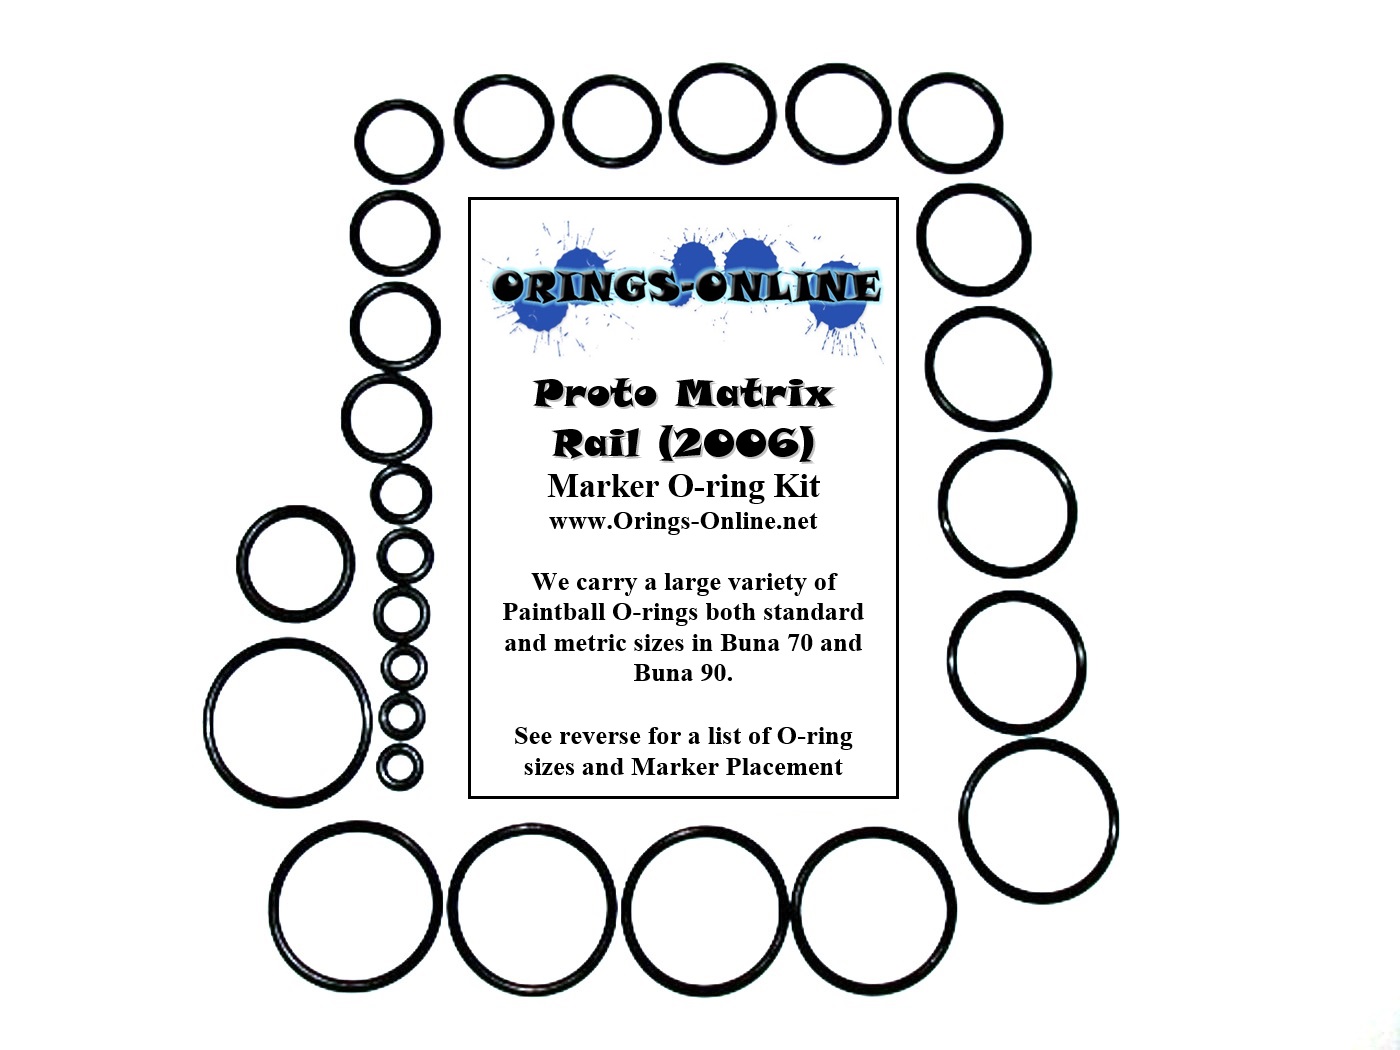 Proto Matrix Rail Marker O-ring Kit